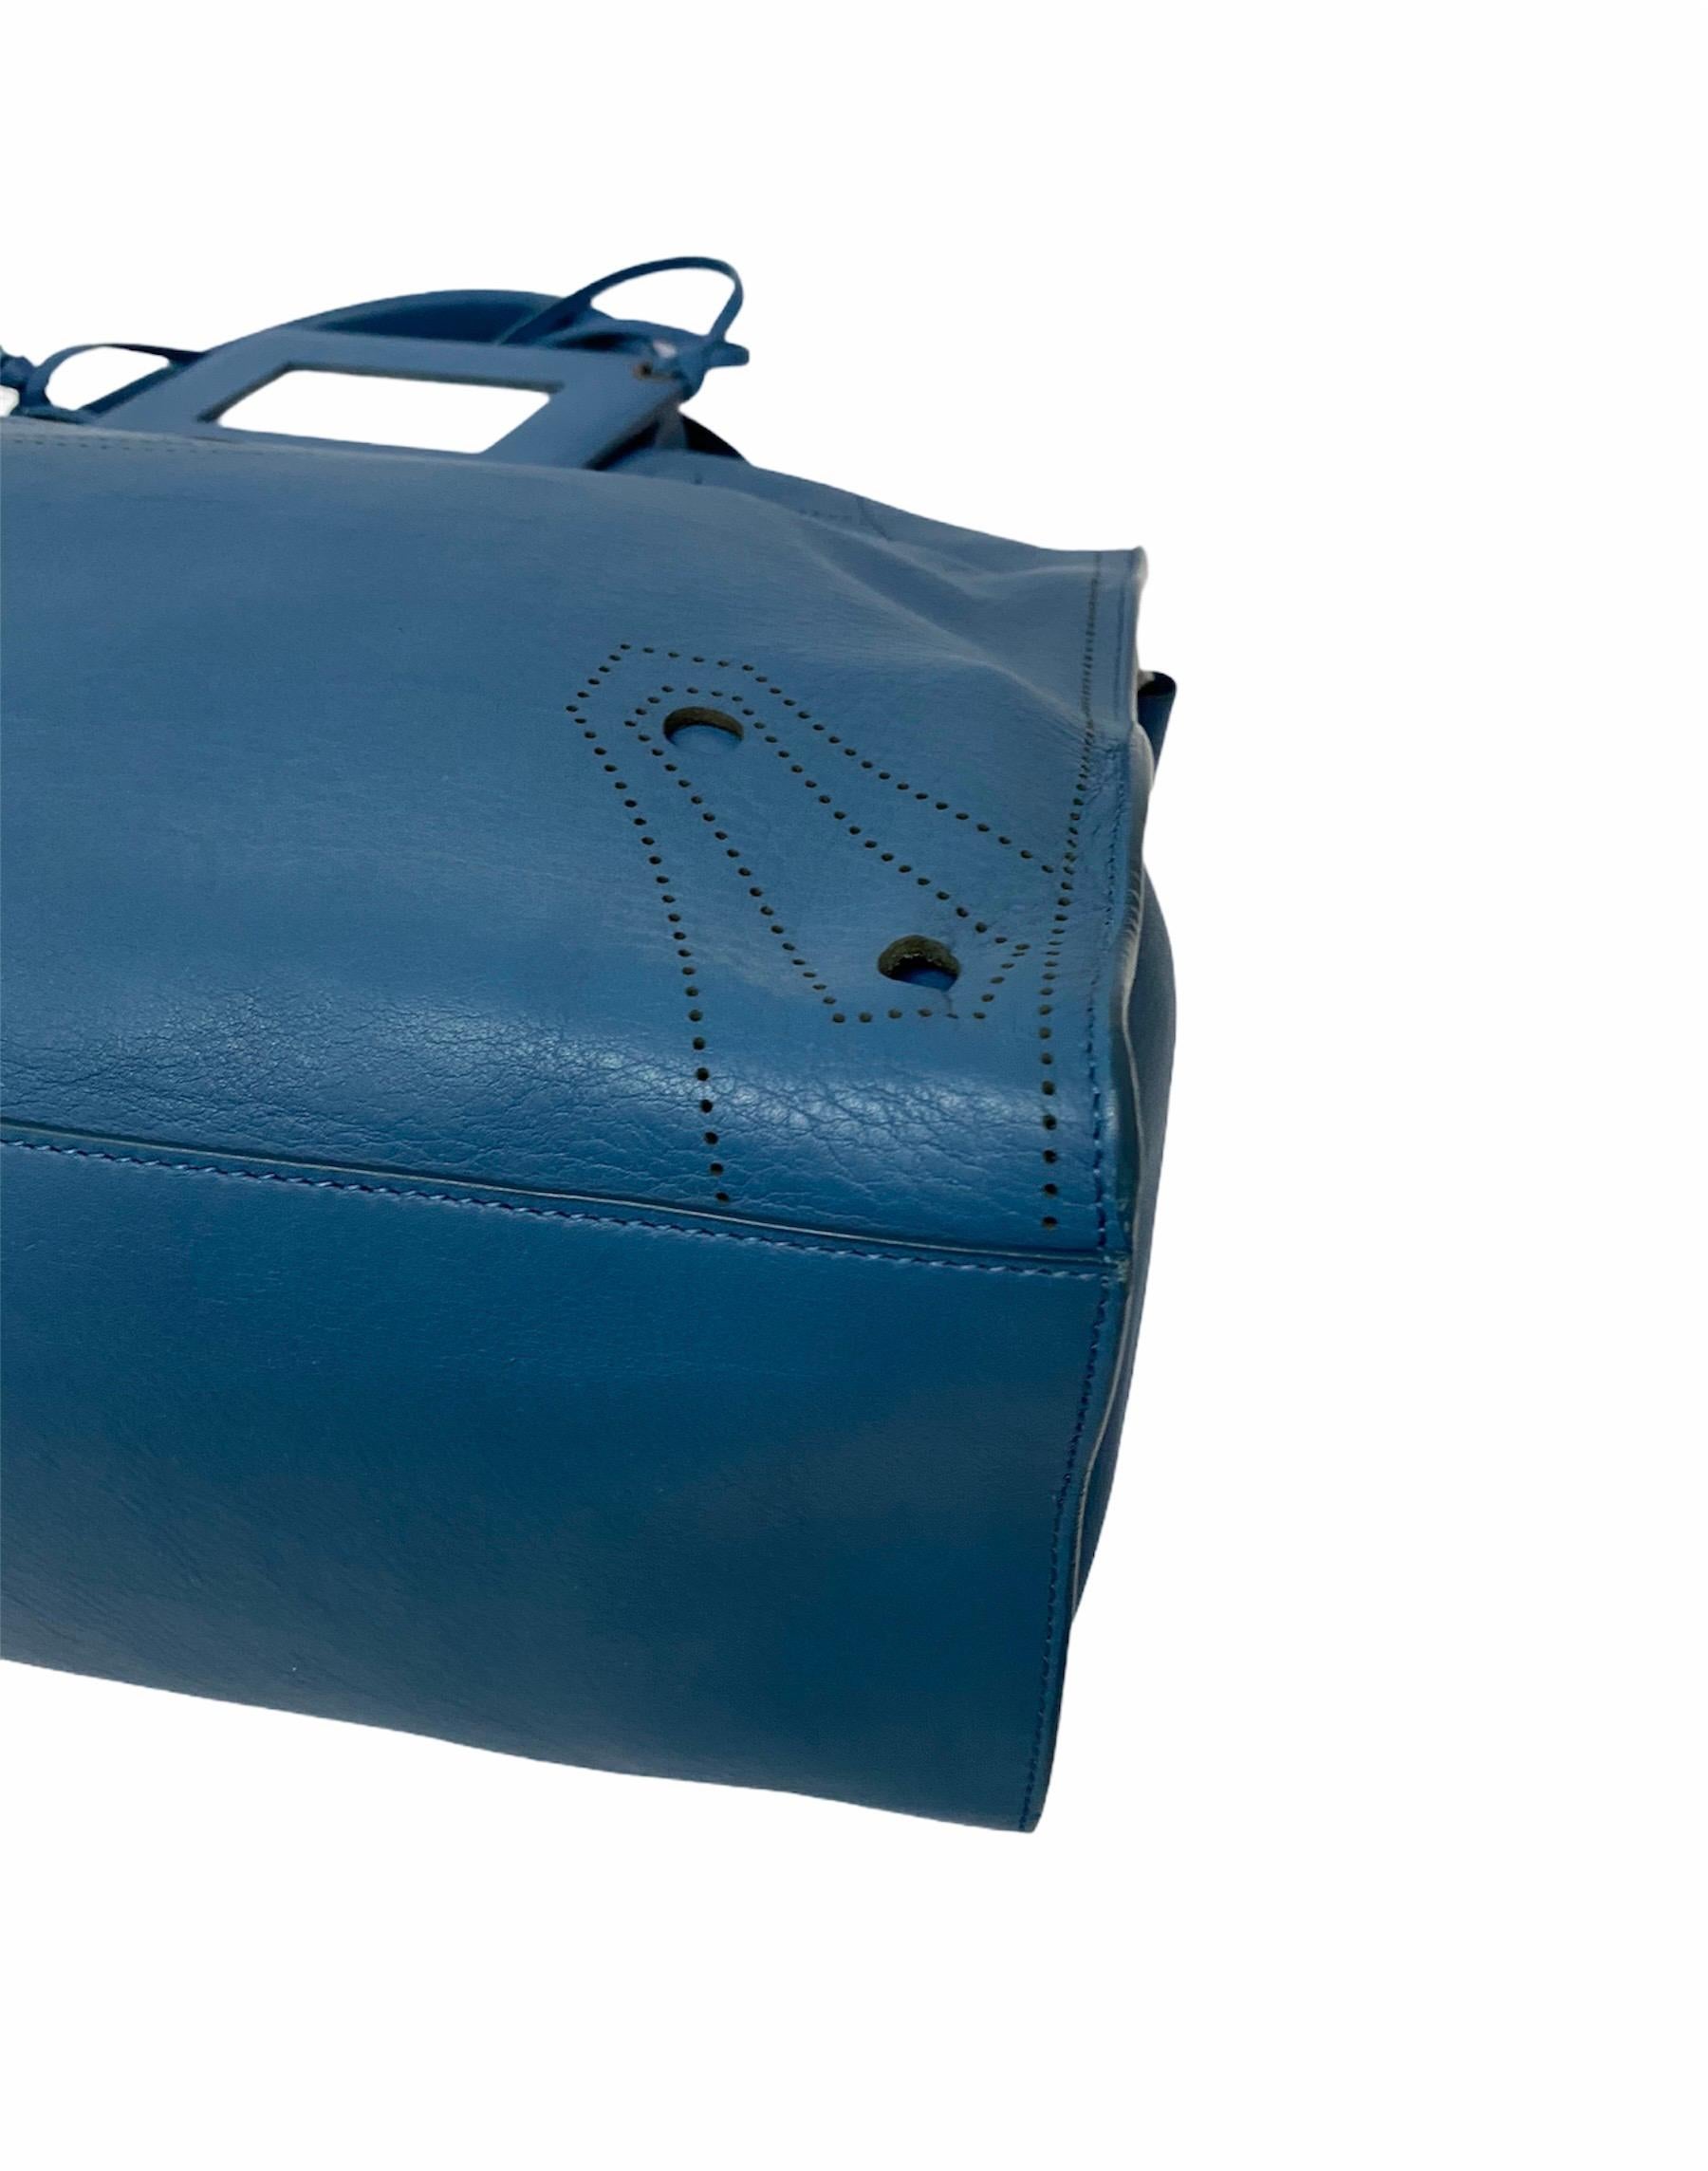 Balenciaga Blue Leather City Bag 2